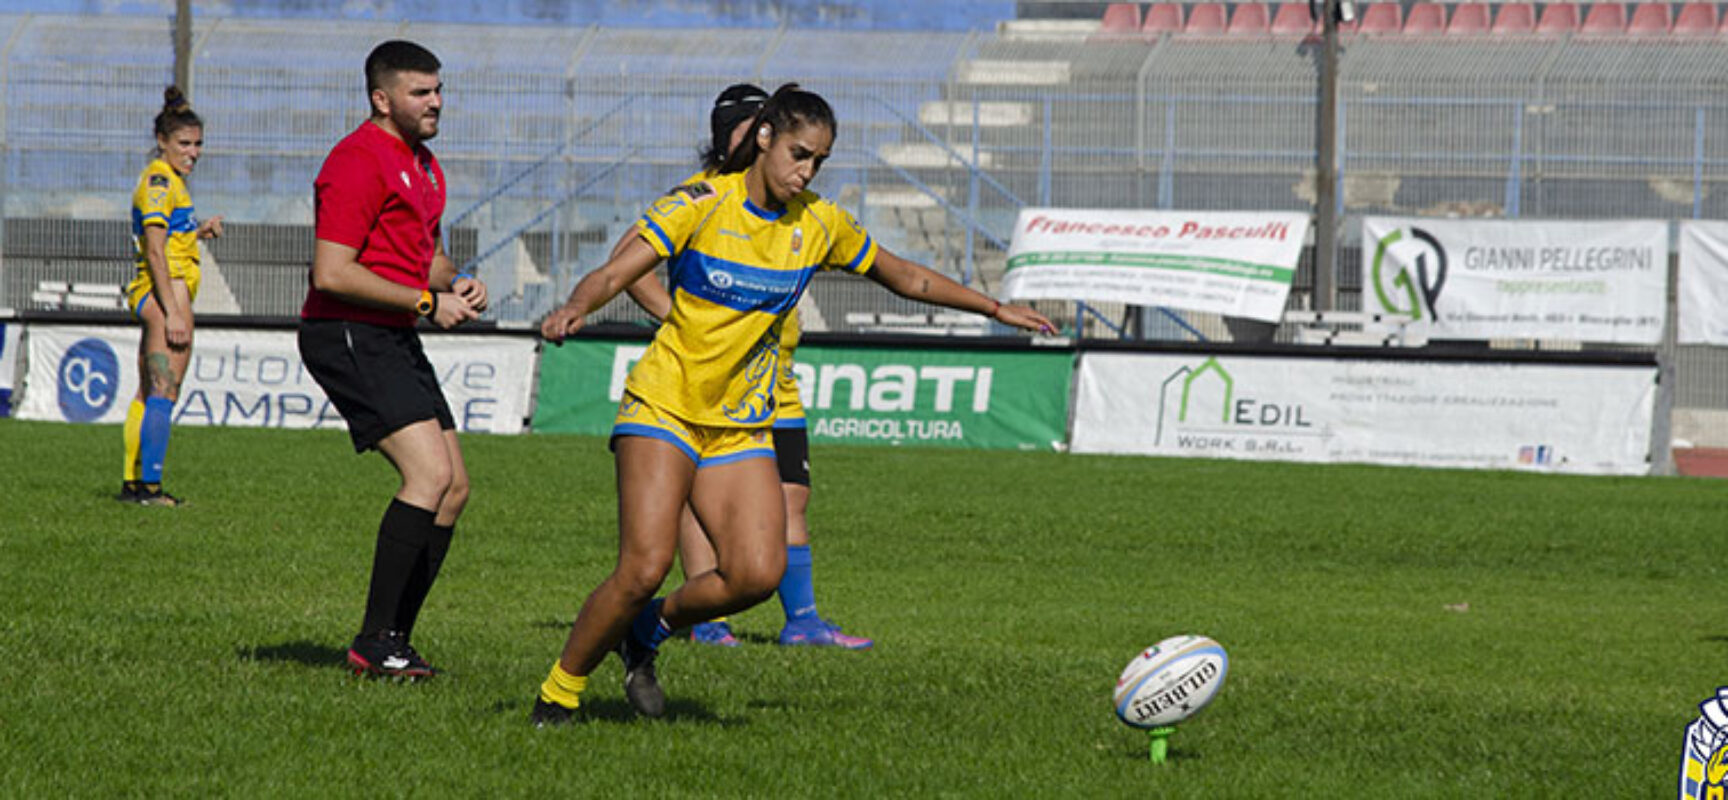 Serie A femminile: Bisceglie Rugby in Toscana per ritrovare punti e convinzioni